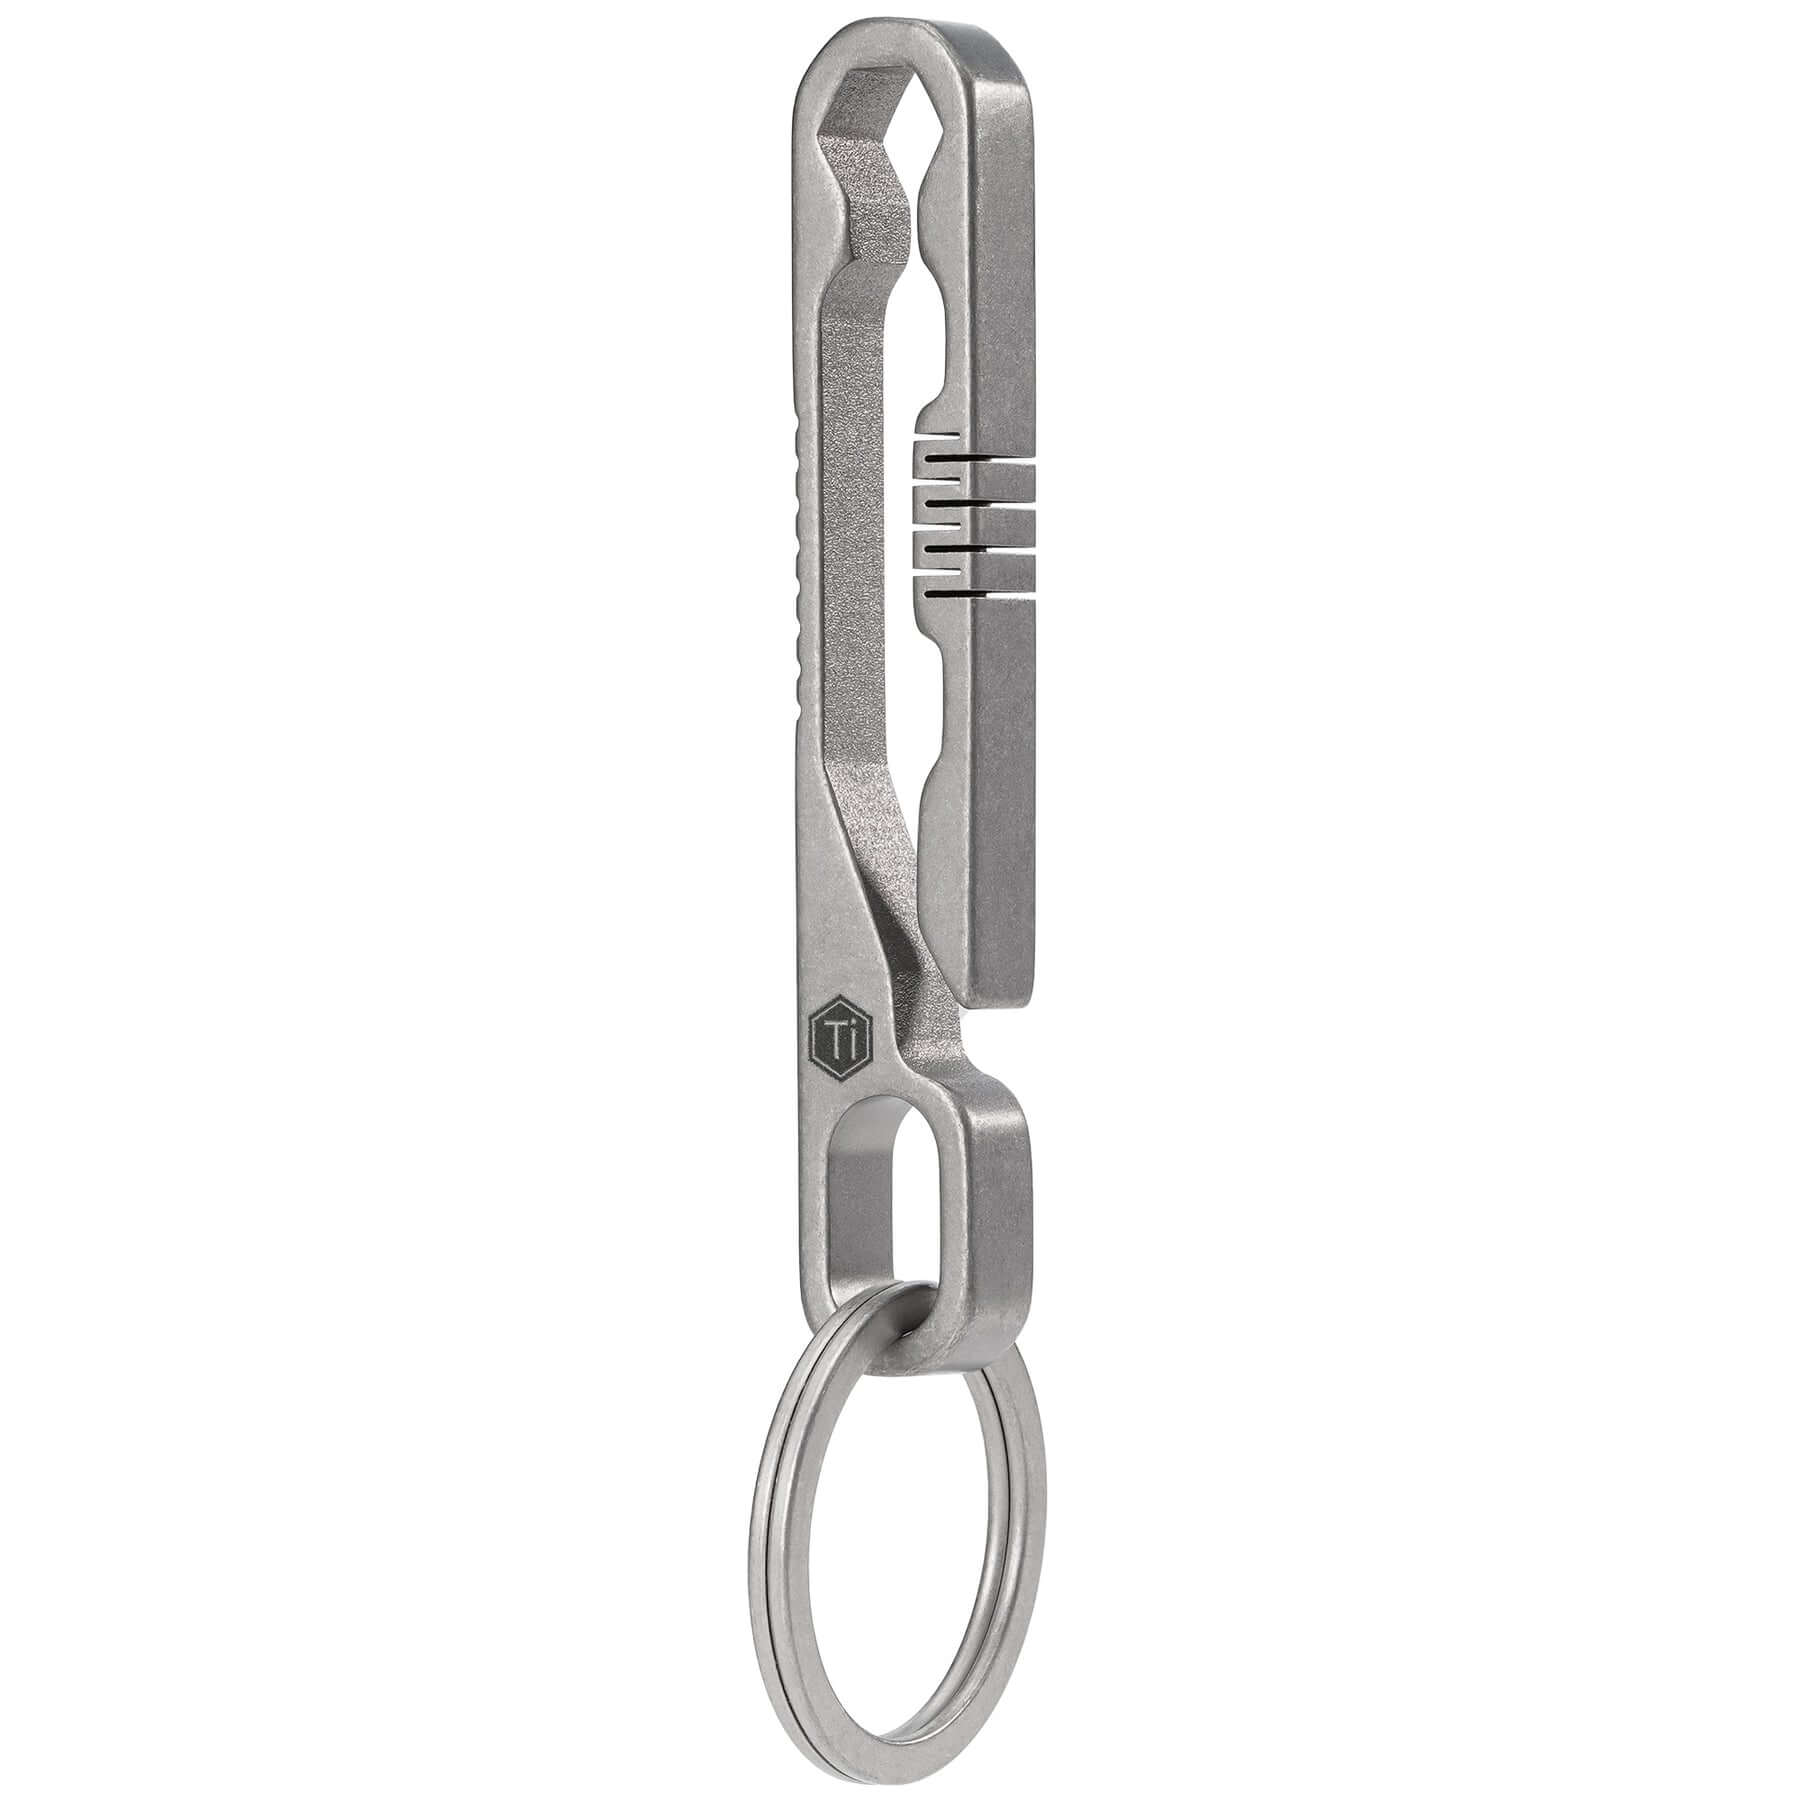 Stainless Steel Buckle Carabiner Keychain Hook Clip Multi